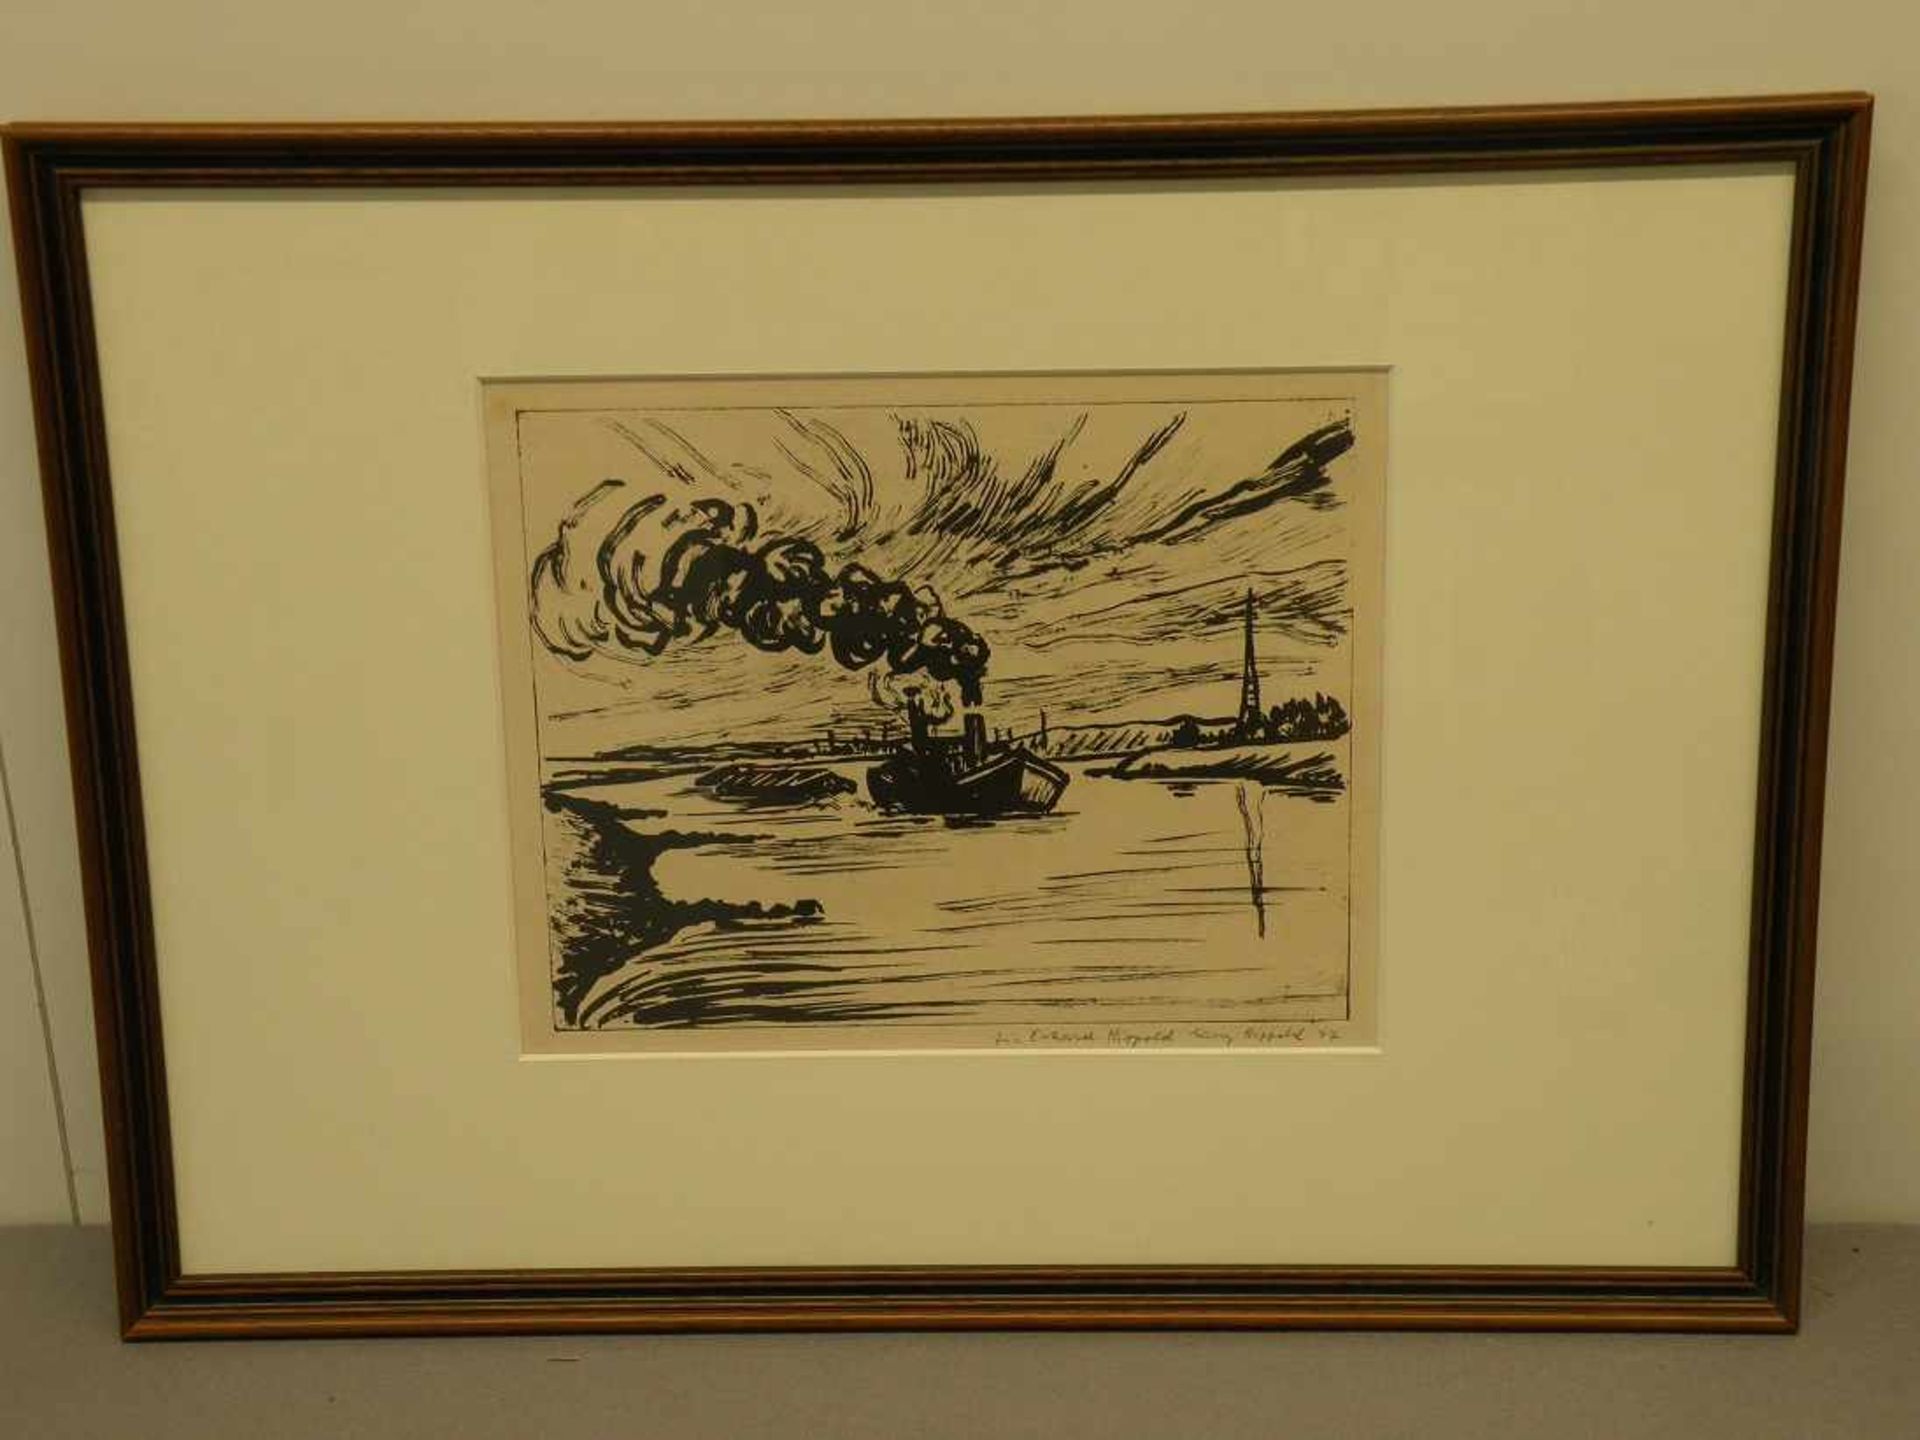 Lithographie handsign. Erhard Hippold, 1909-1972, dat. 1947, 22x27 cm